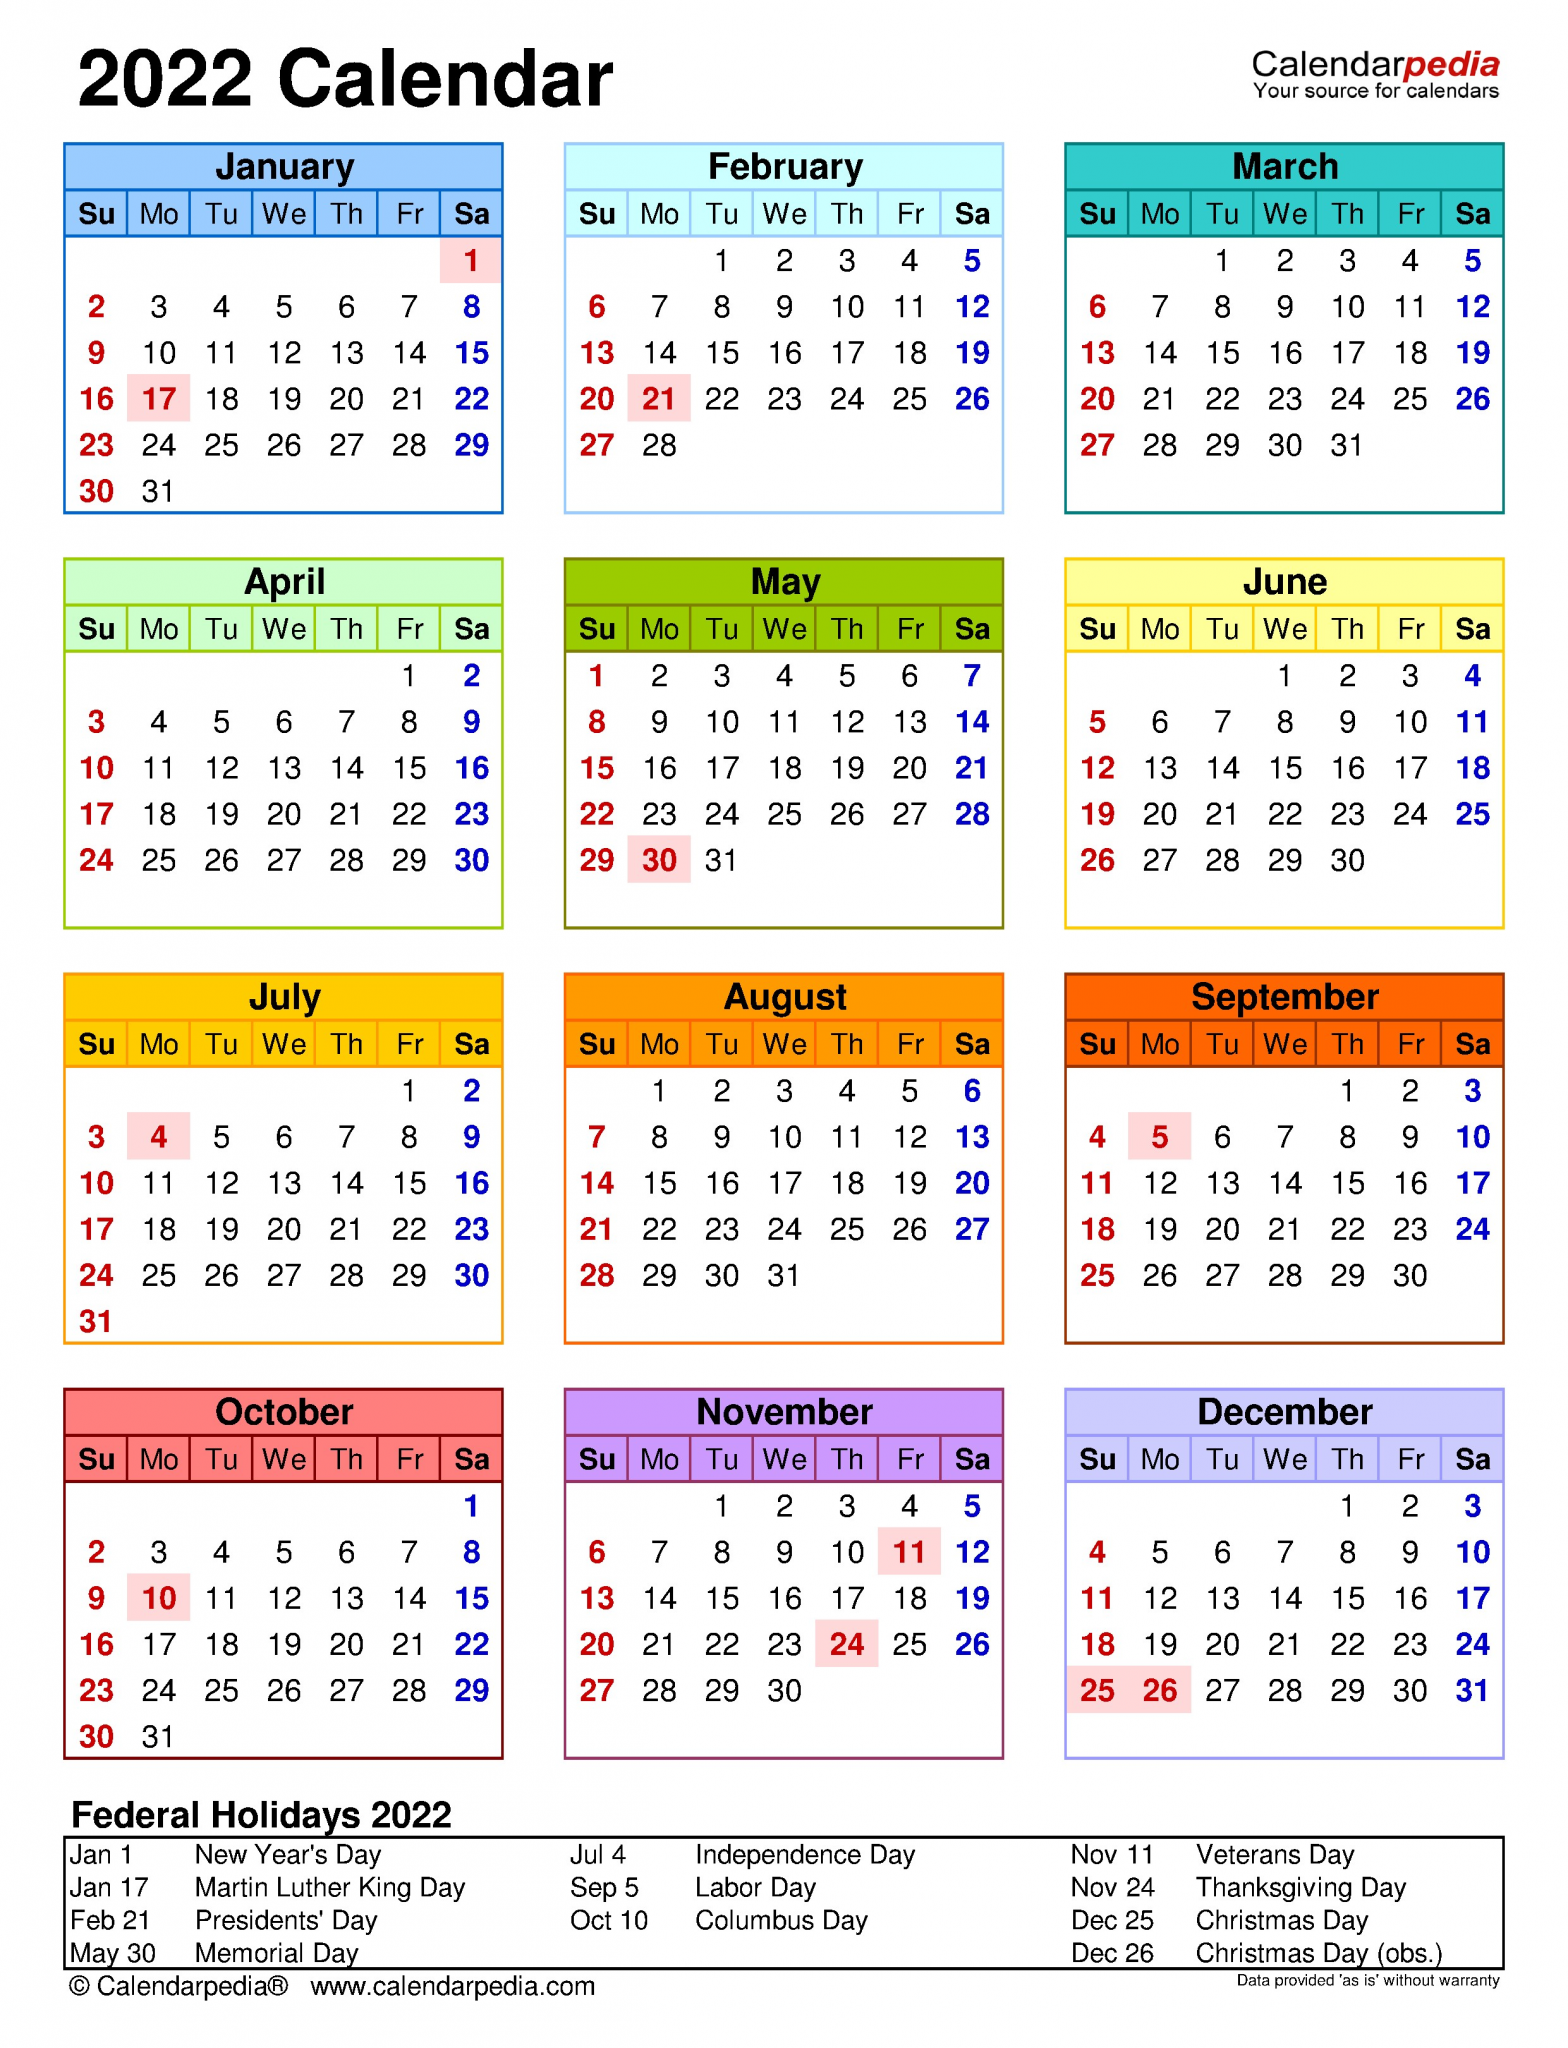 2022 calendar pdf templates